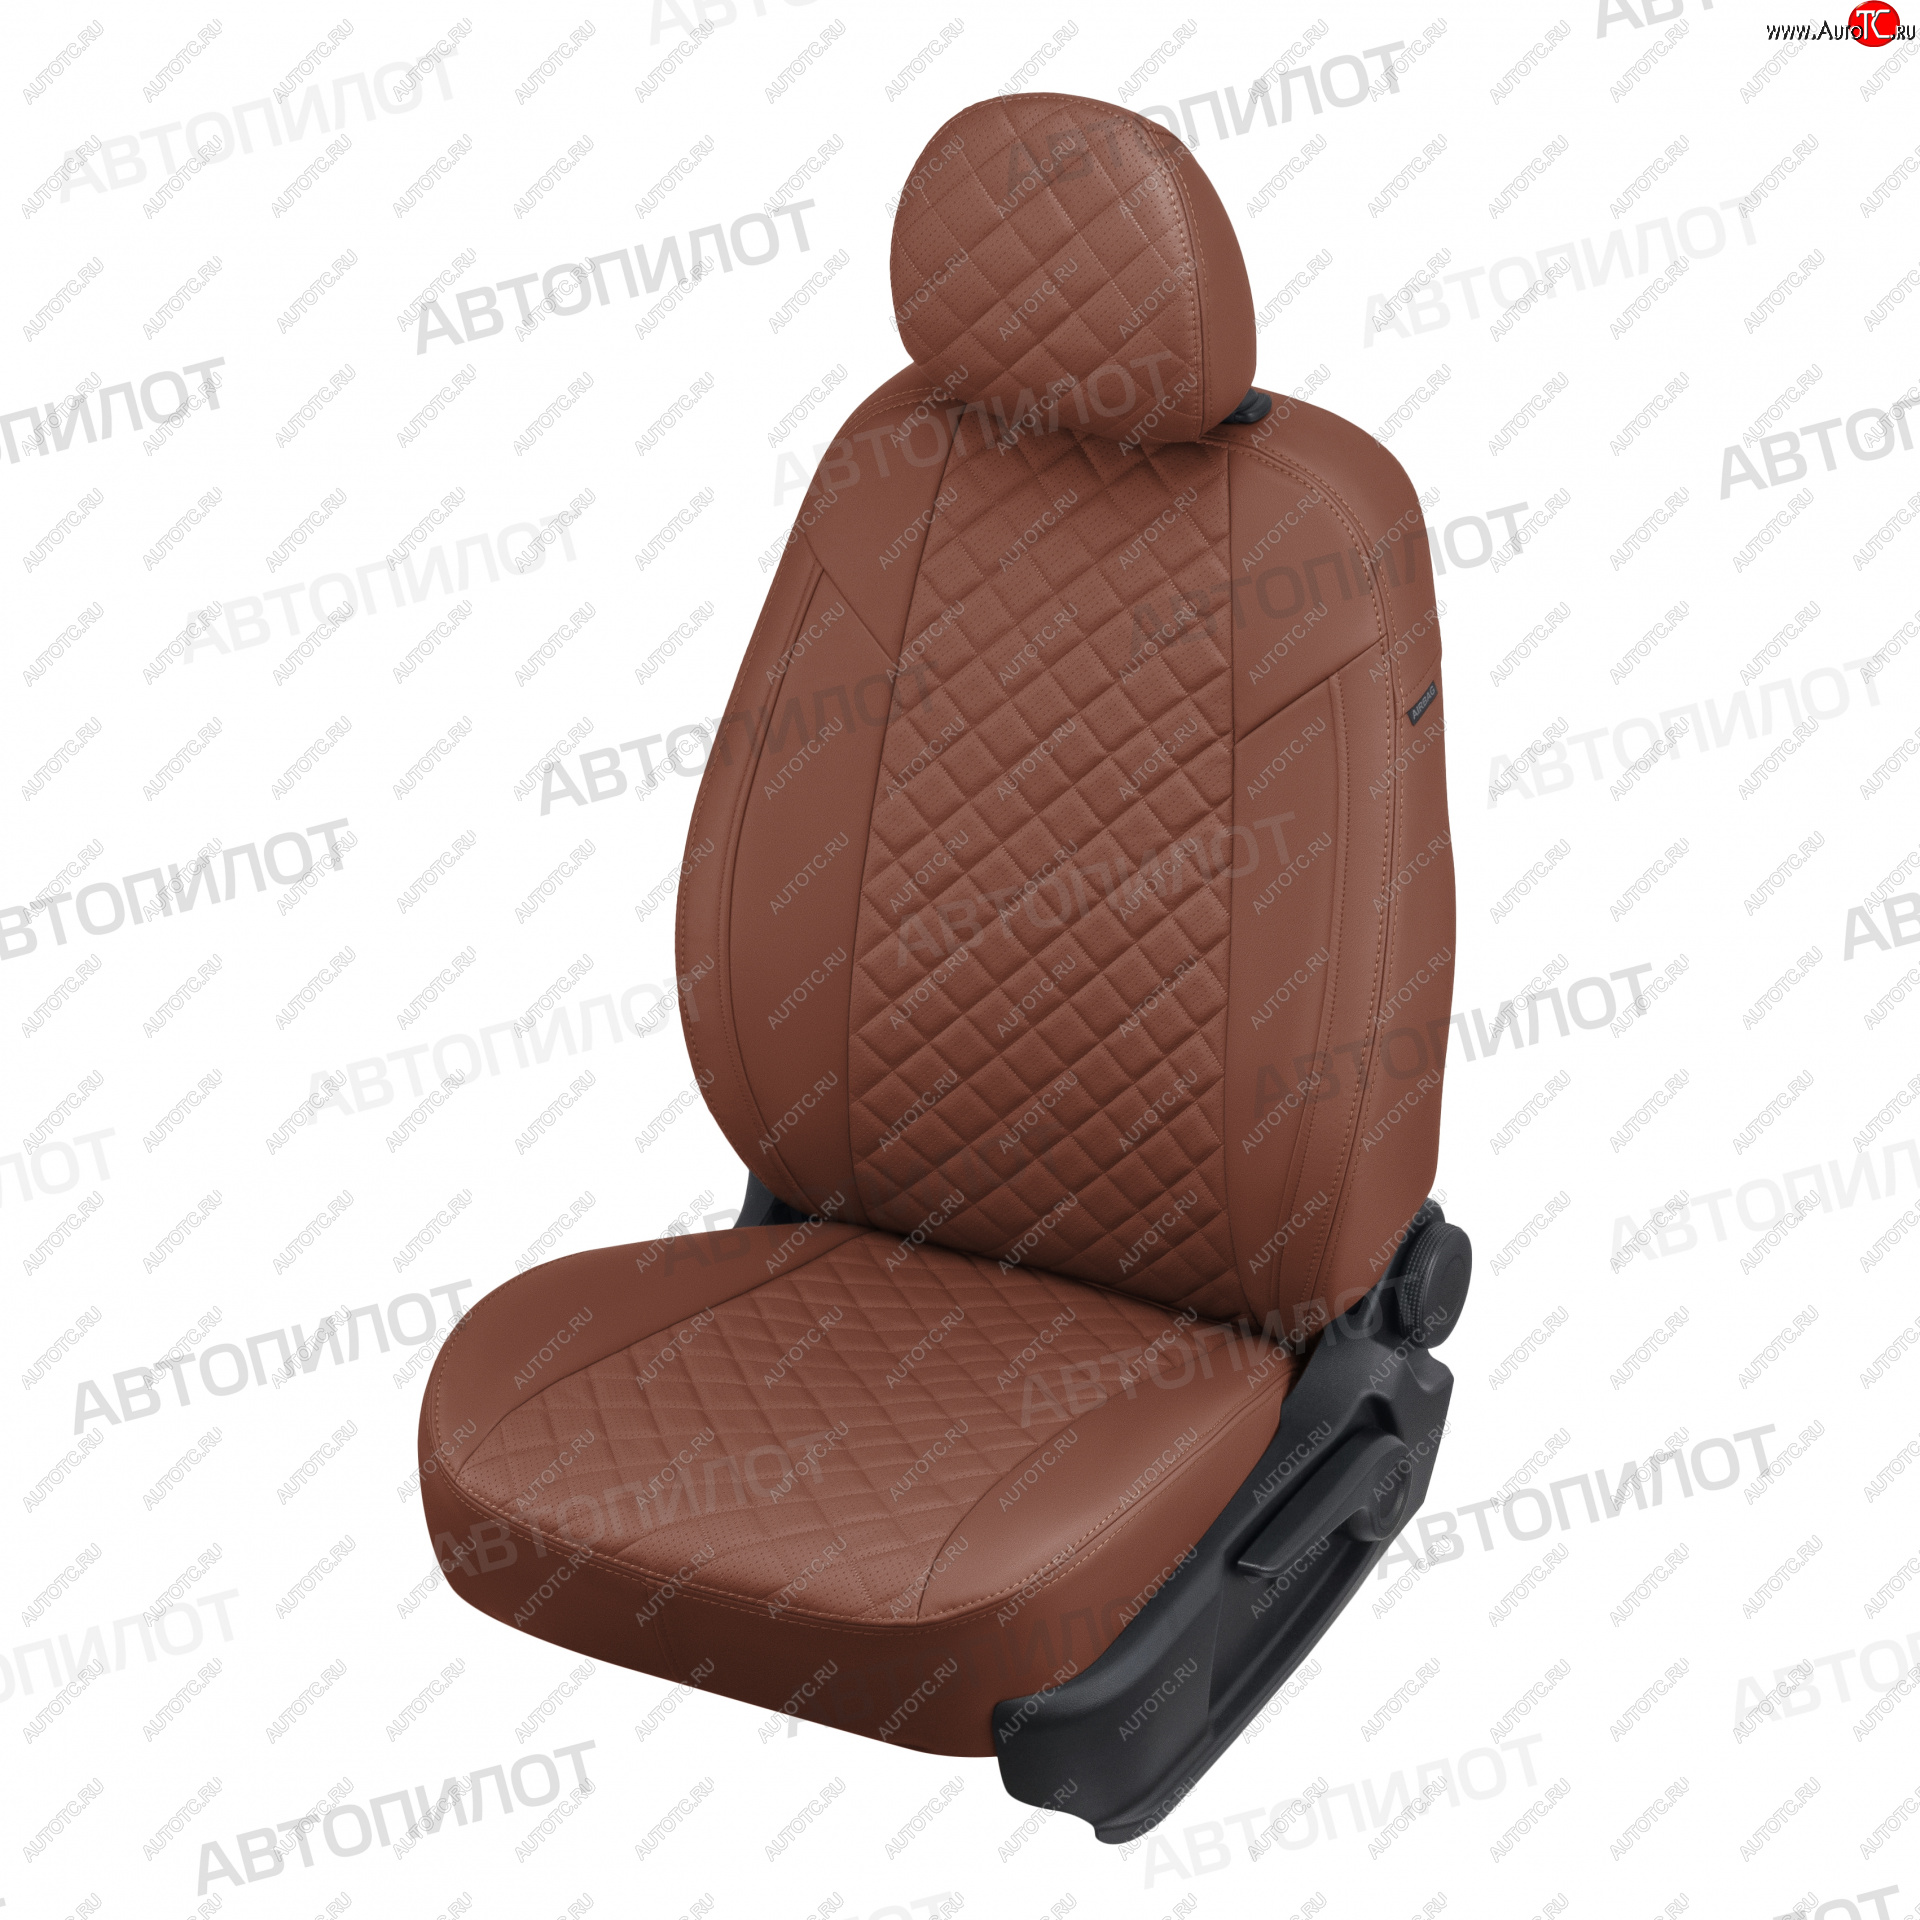 13 999 р. Чехлы сидений (экокожа) Автопилот Ромб  KIA Ceed  1 ED (2006-2012) (коричневый)